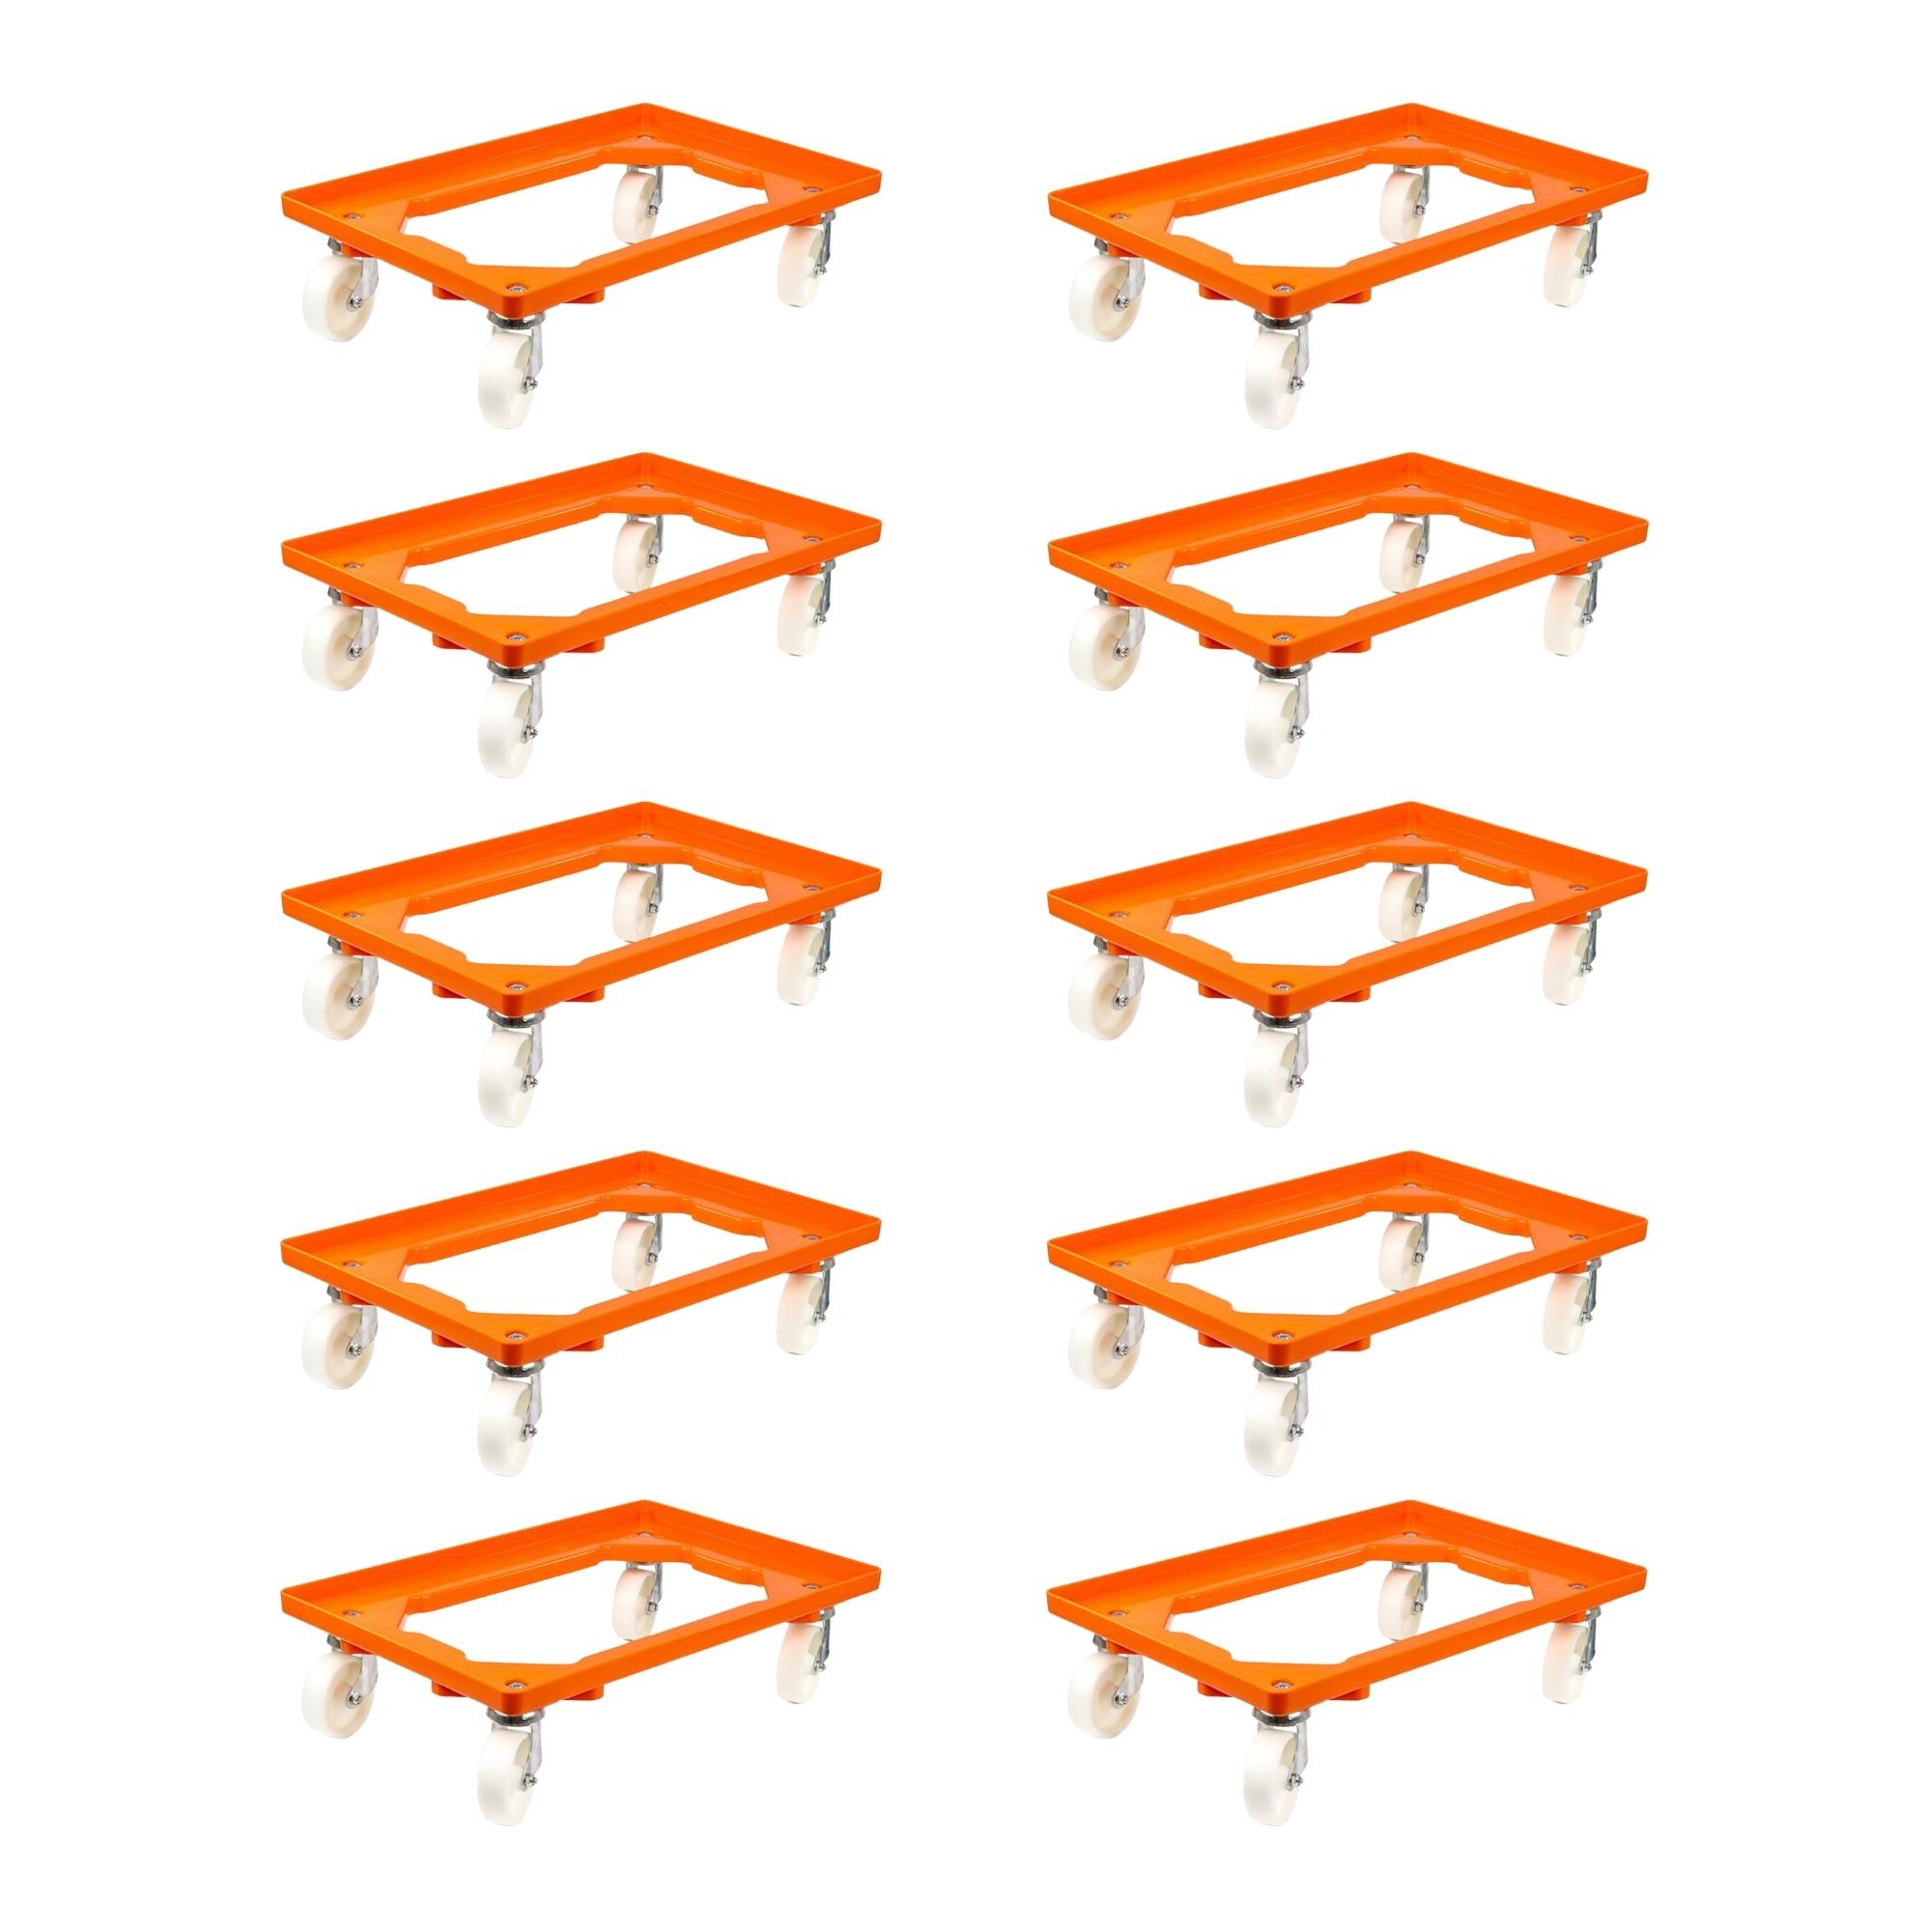 SparSet 10x Transportroller für Euroboxen 60x40cm mit Kunststoffräder orange | Offenes Deck | 2 Lenkrollen & 2 Bockrollen | Traglast 300kg | Kistenroller Logistikroller Rollwagen Profi-Fahrgestell